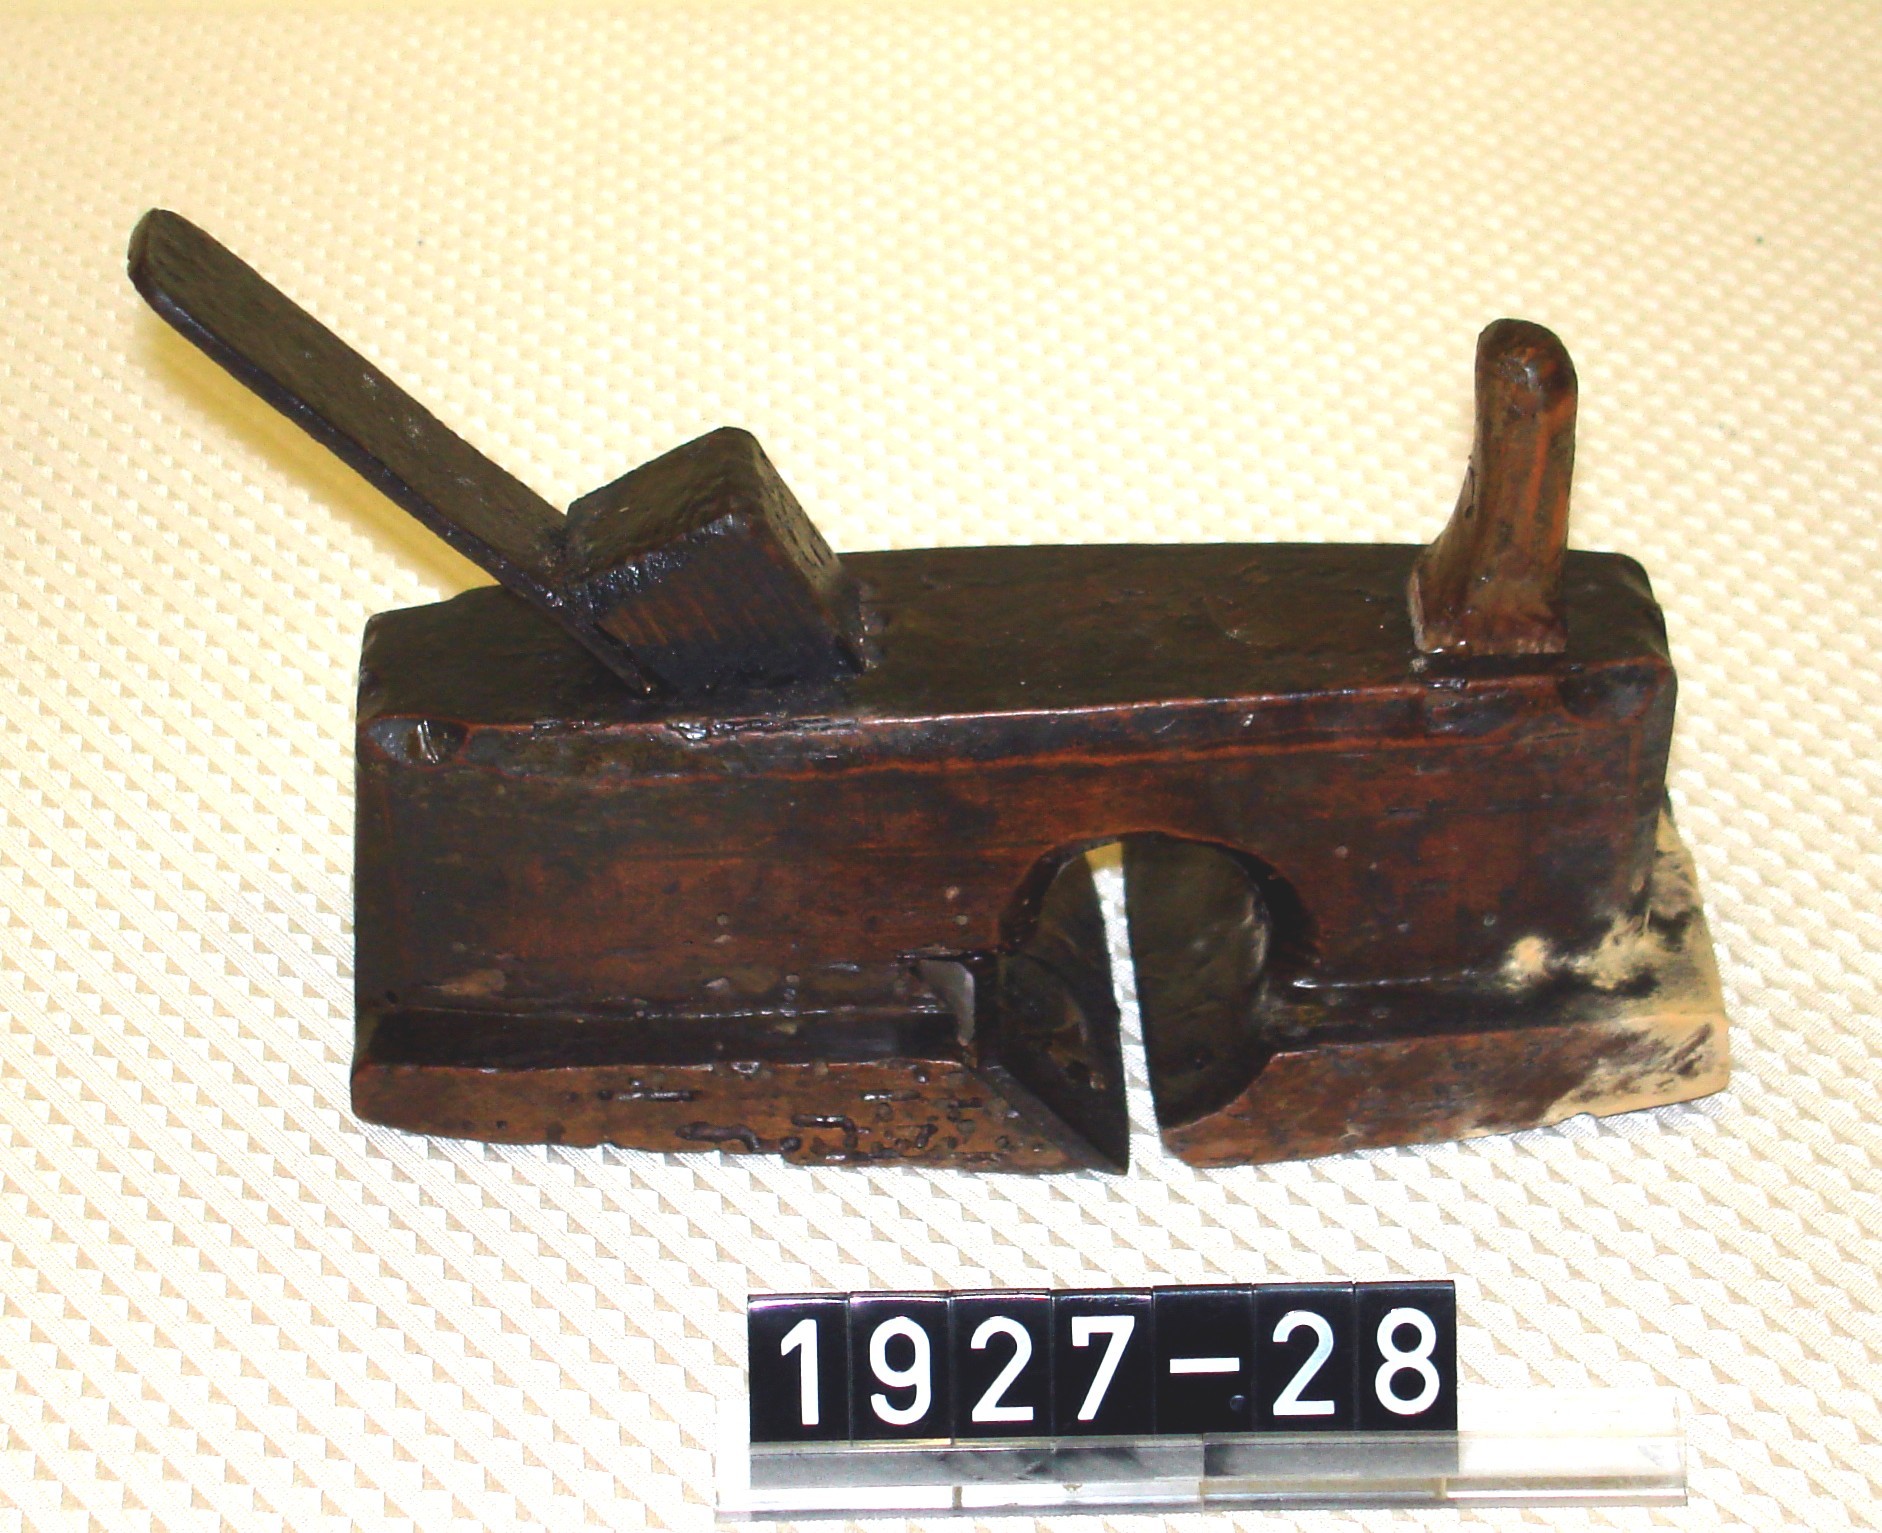 Küferhandwerkszeug aus Eisen/Holz; Handhobel; Küferhobel; 18. Jh. (Stadtmuseum Bad Dürkheim, Museumsgesellschaft Bad Dürkheim e.V. CC BY-NC-SA)